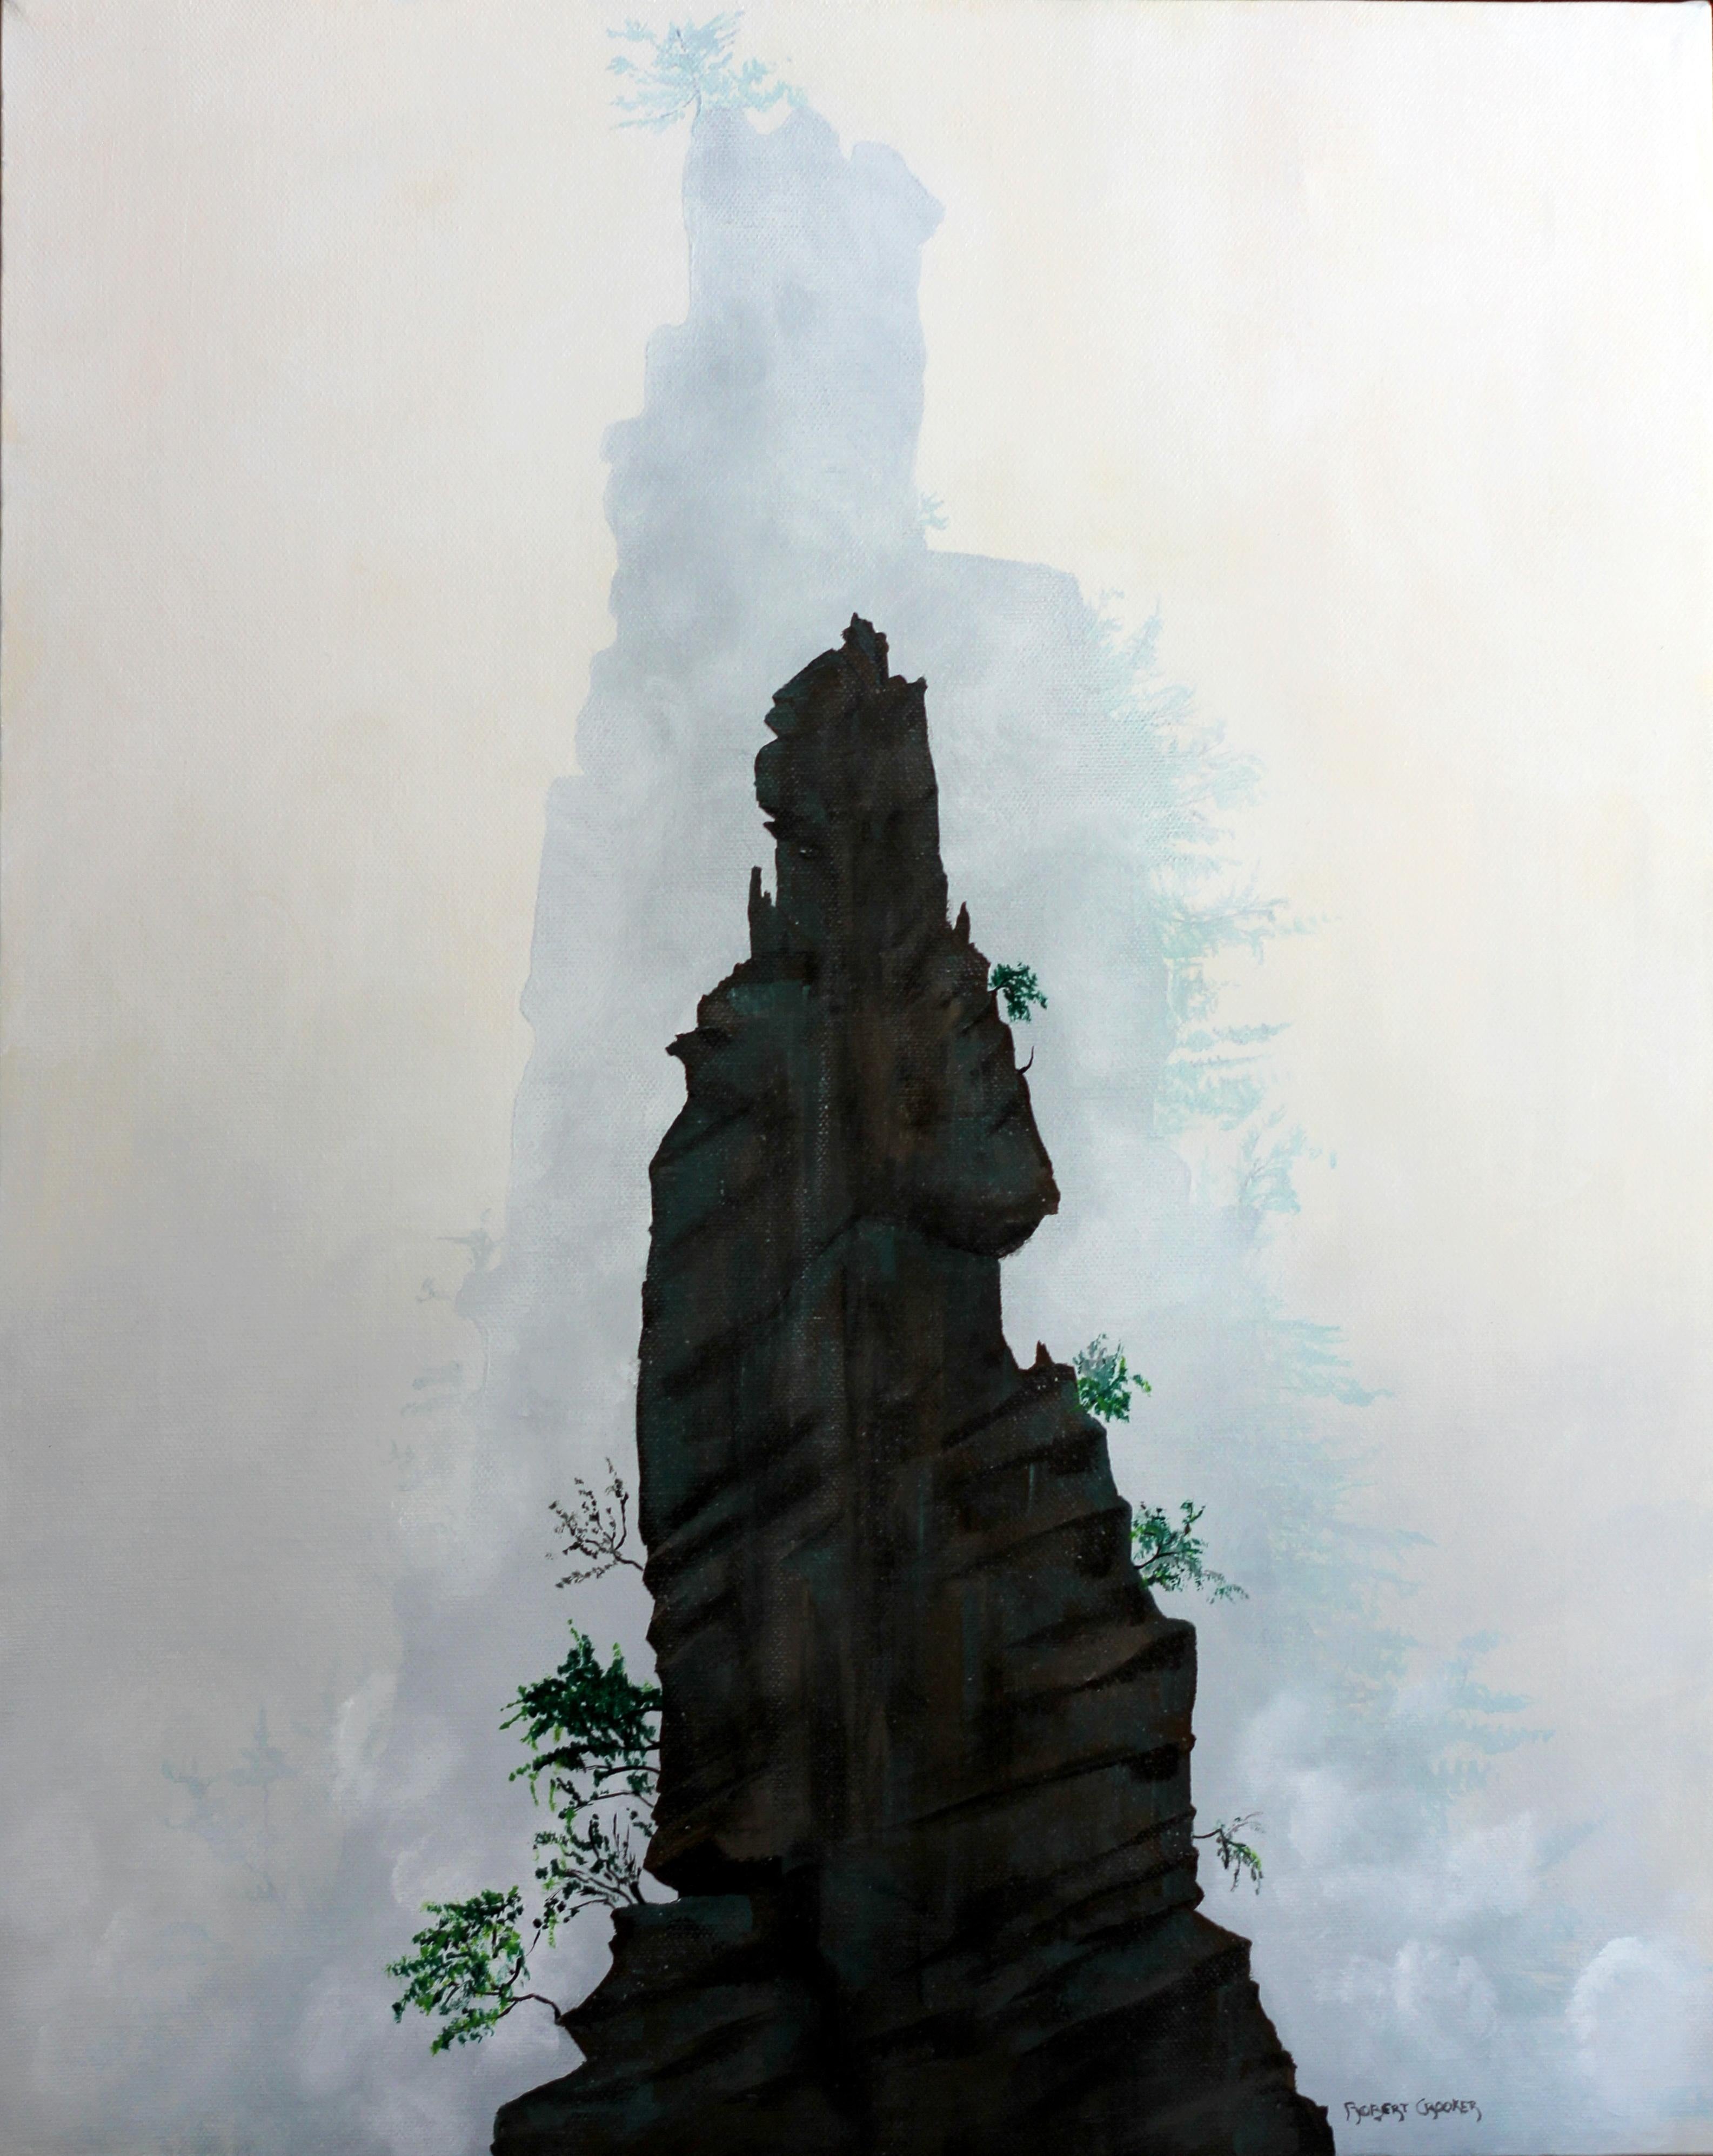 Jagged Peaks, Peinture de paysage originale, 2013